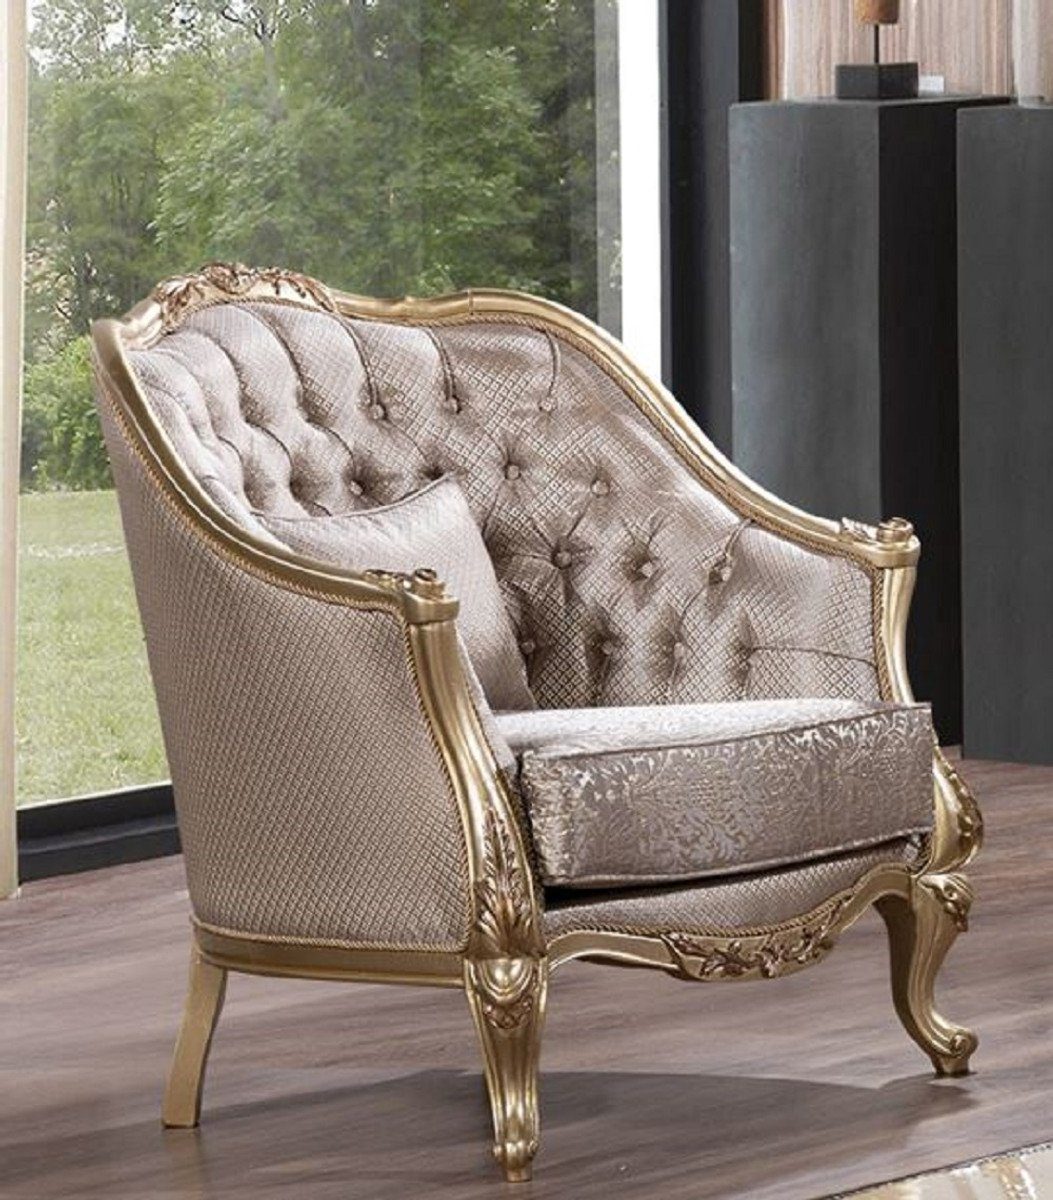 Barock elegantem Sessel - mit Barock Muster Padrino Barockstil - Möbel Luxus Wohnzimmer / Sessel Silber Sessel - Möbel Einrichtung Casa Gold Wohnzimmer Casa Padrino Barock Luxus Prunkvoller - im